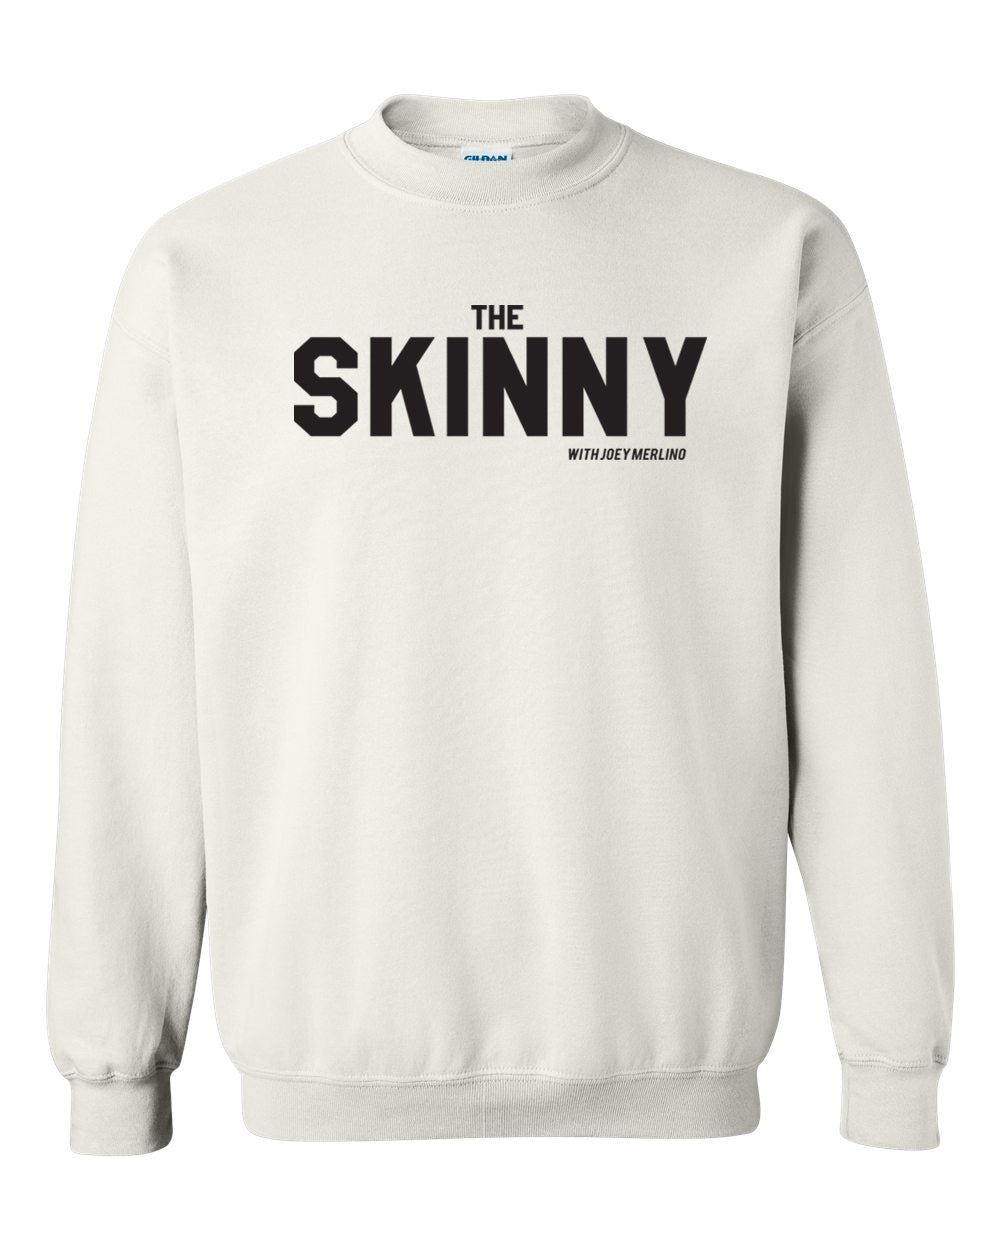 The Skinny With Joey Merlino Logo Clothing – ManateezDesign.com